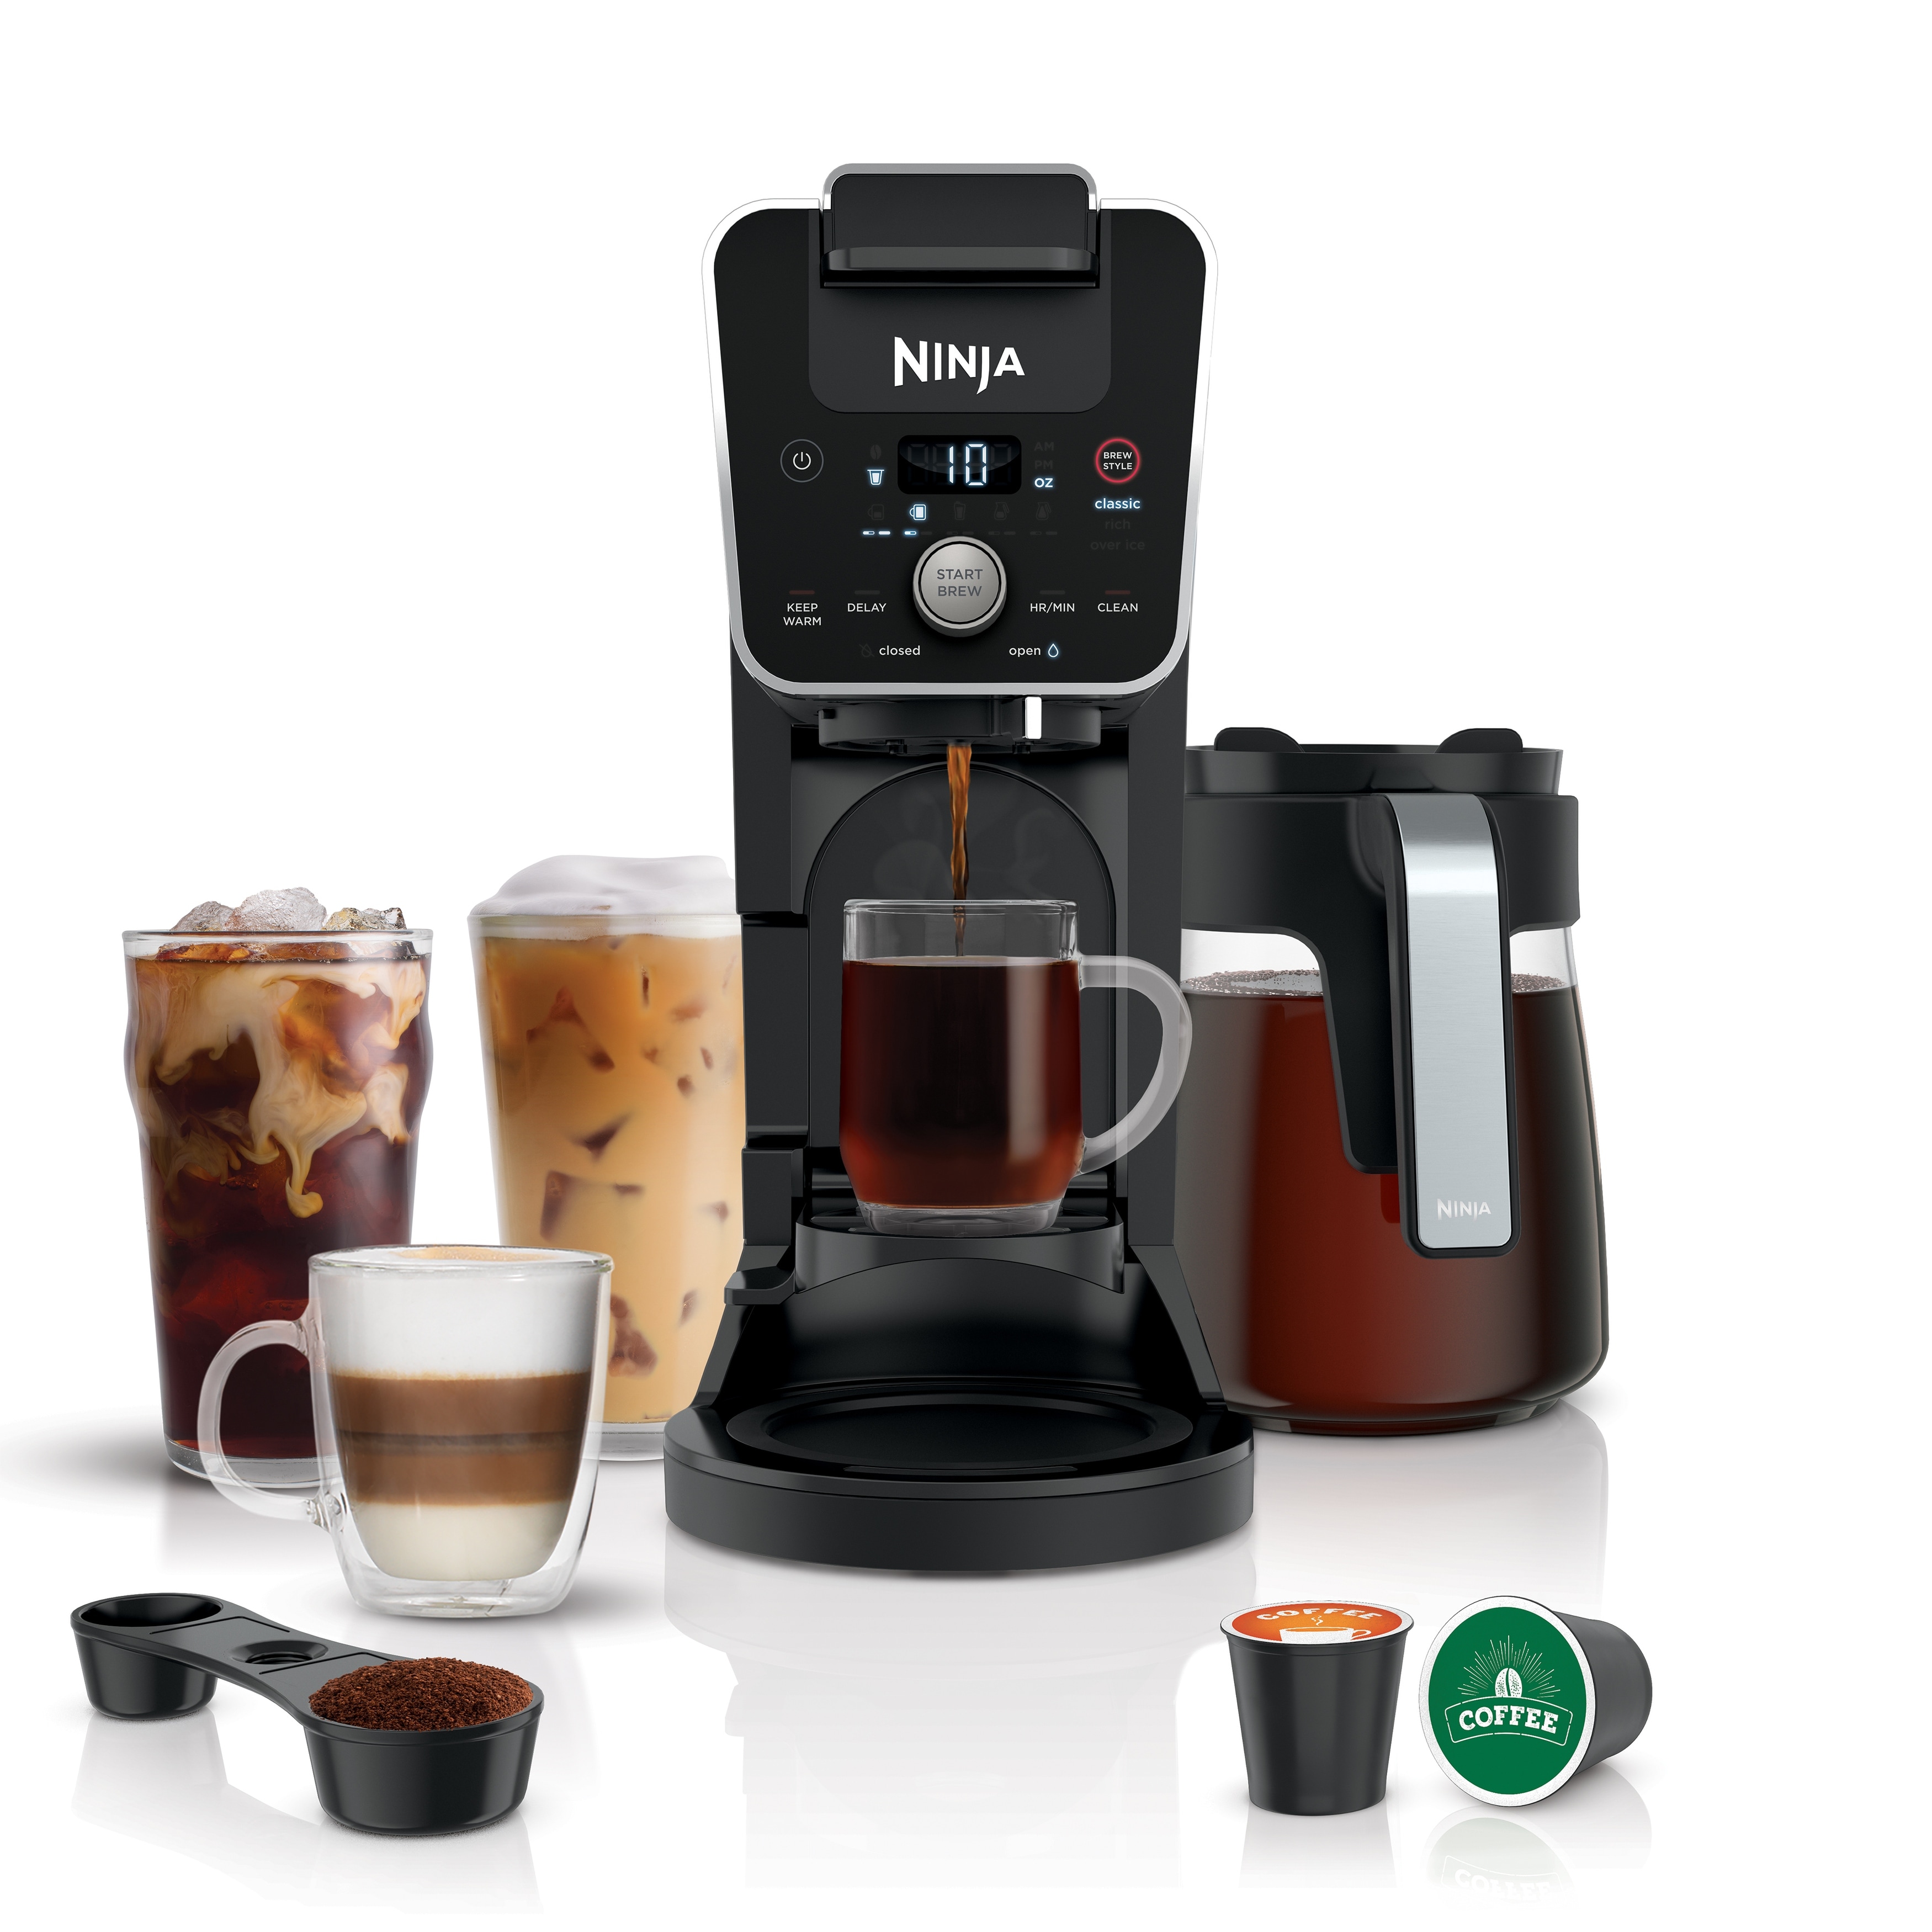 Vinci Housewares Nitro Cold Brew Maker Home Brew Nitrogen Infusion Coffee  Keg System w EZ Dispensing System Includes Drip Mat - Bed Bath & Beyond -  38316880